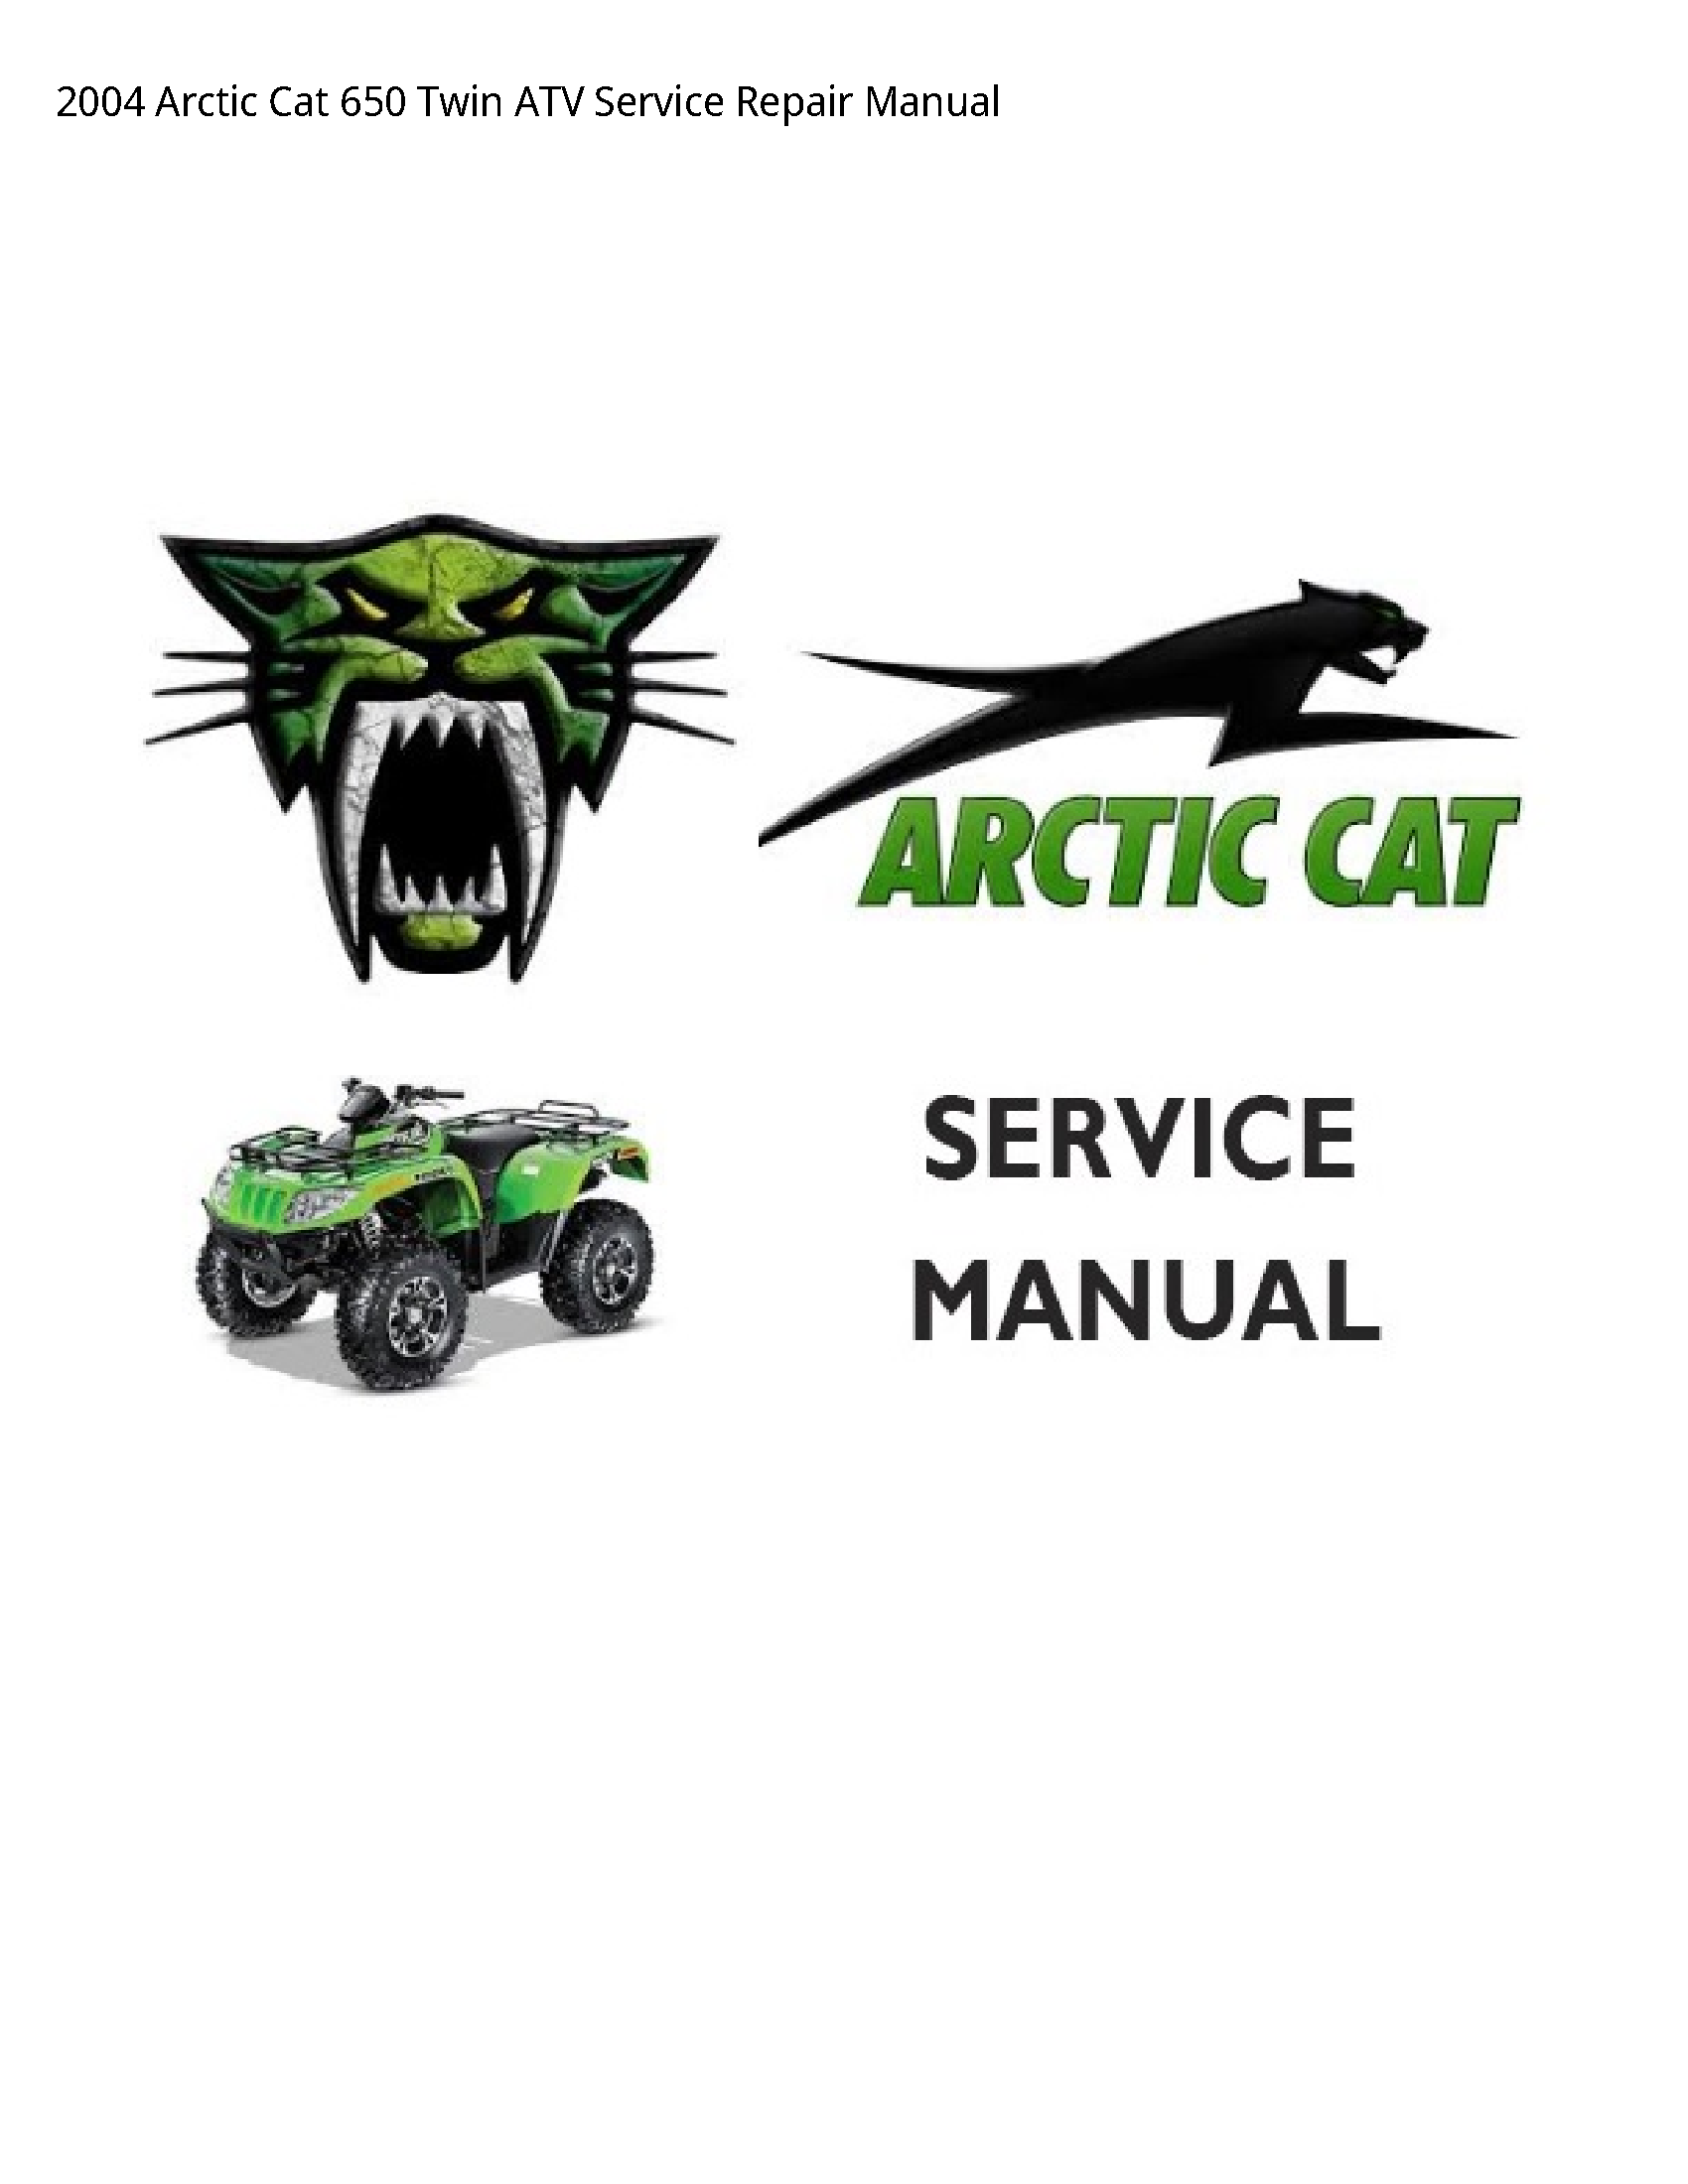 Arctic Cat 650 Twin ATV manual